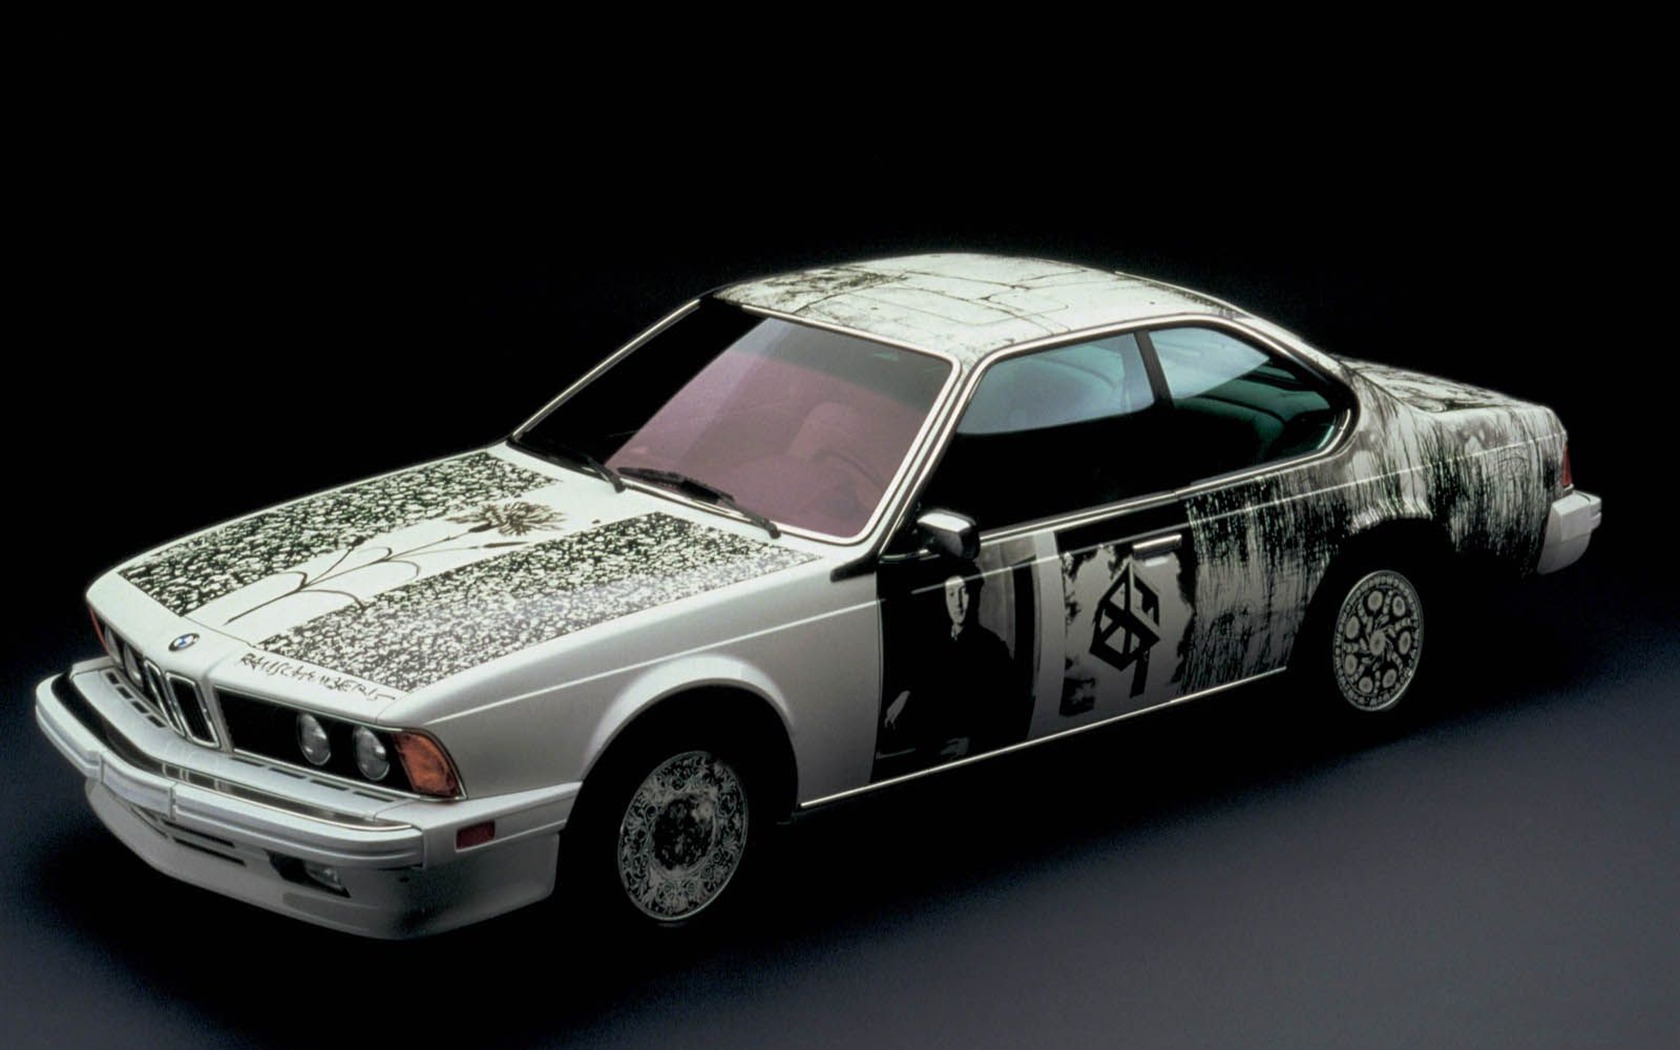  BMWは、ArtCarsの壁紙 #10 - 1680x1050